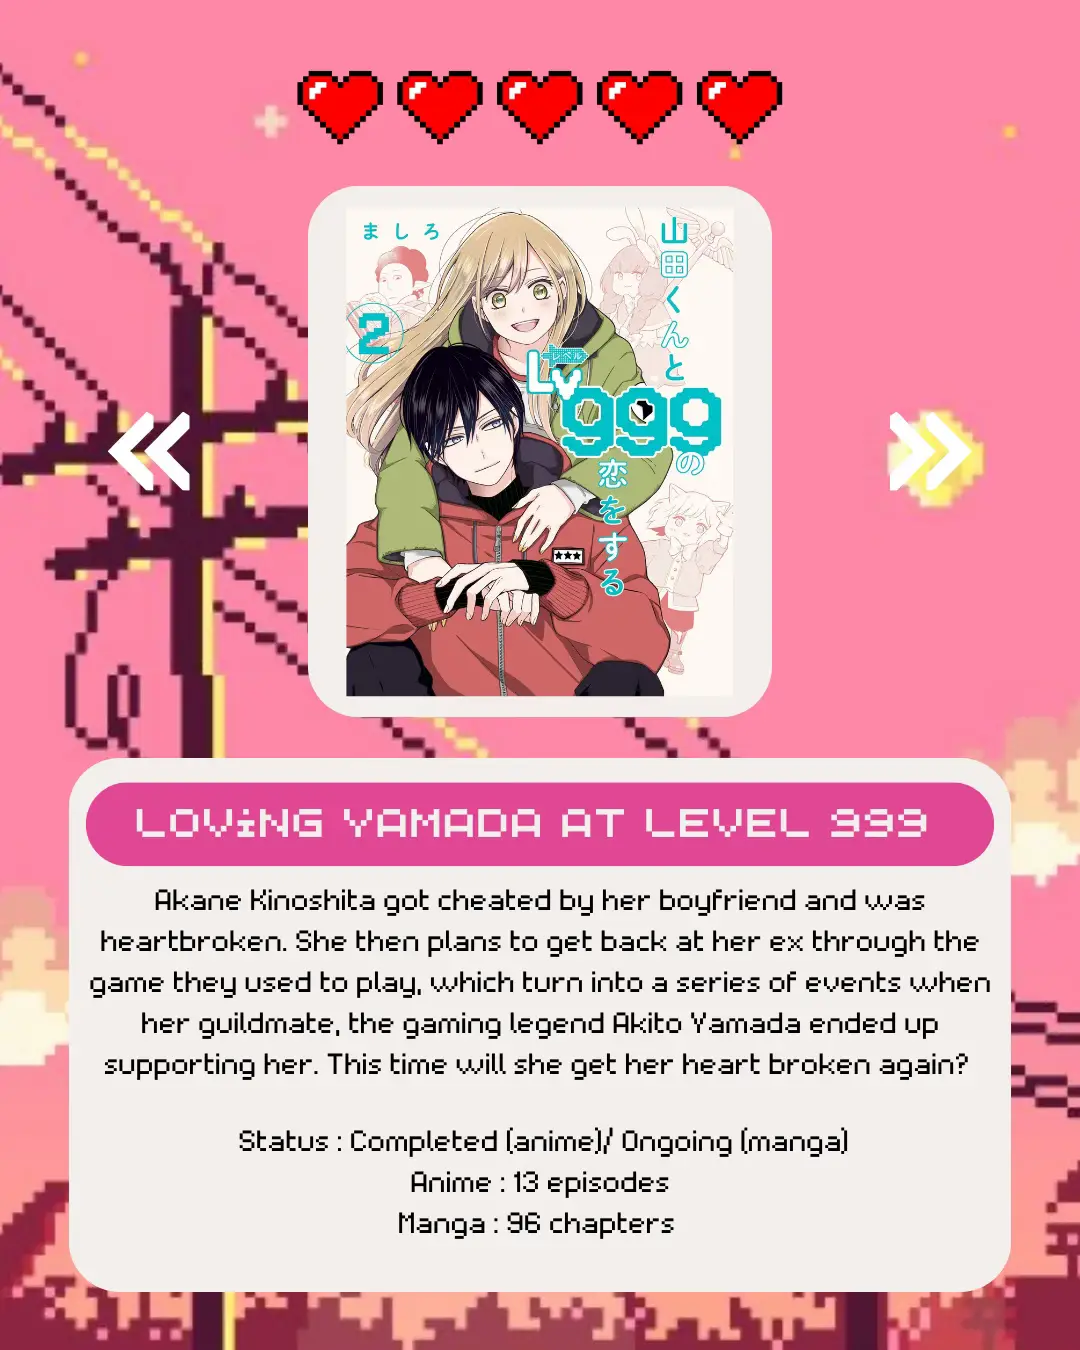 Best Romance Anime Like Loving Yamada At Lv999